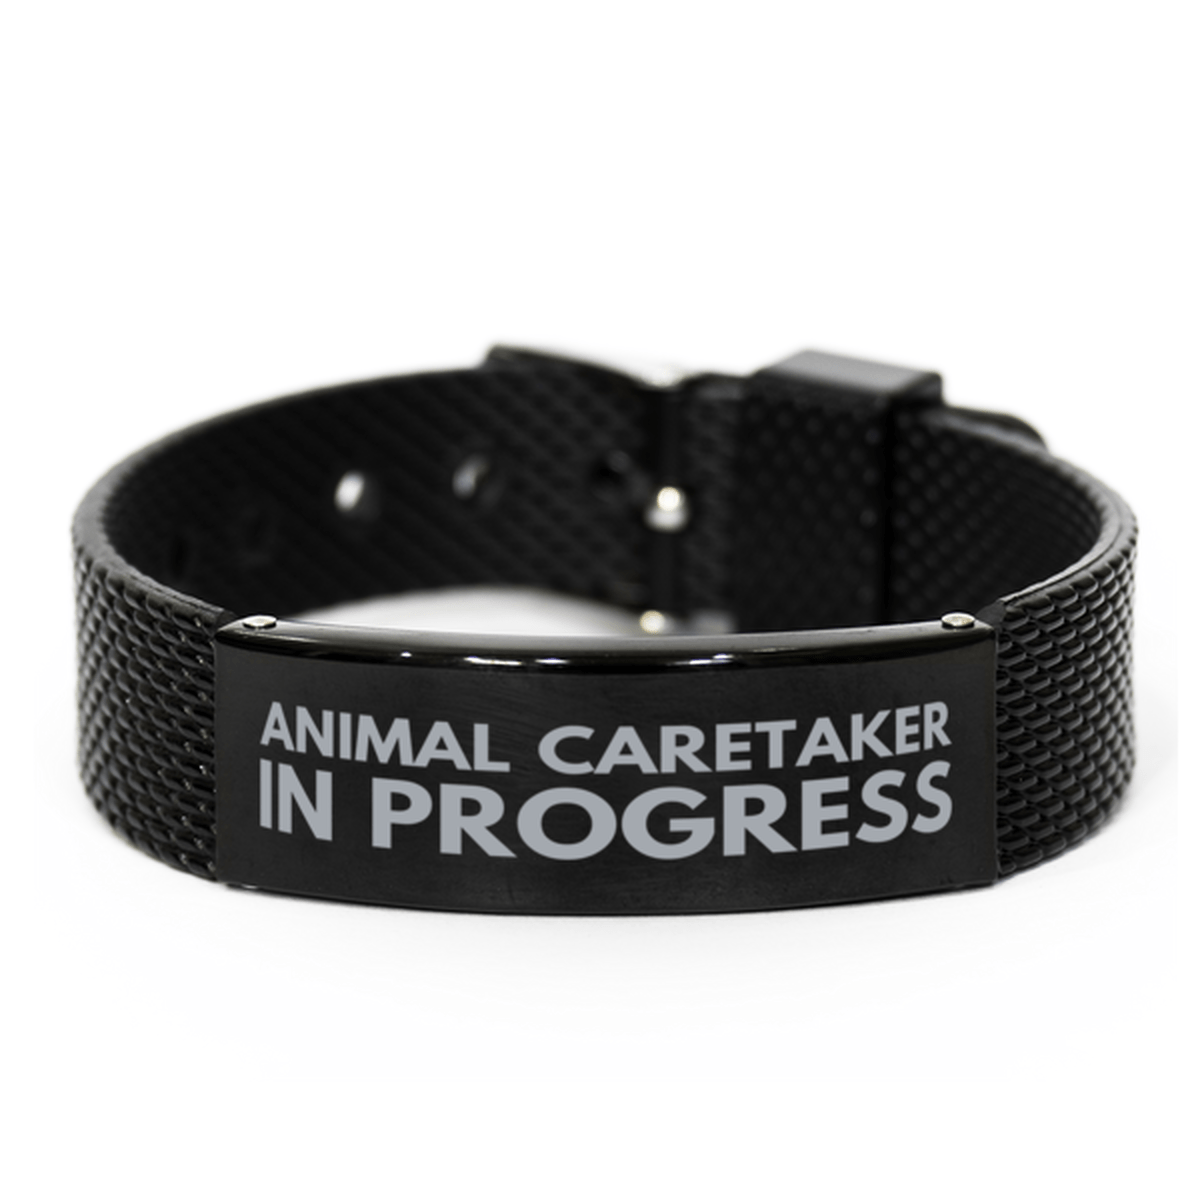 Inspirational Animal Caretaker Black Shark Mesh Bracelet, Animal Caretaker In Progress, Best Graduation Gifts for Students